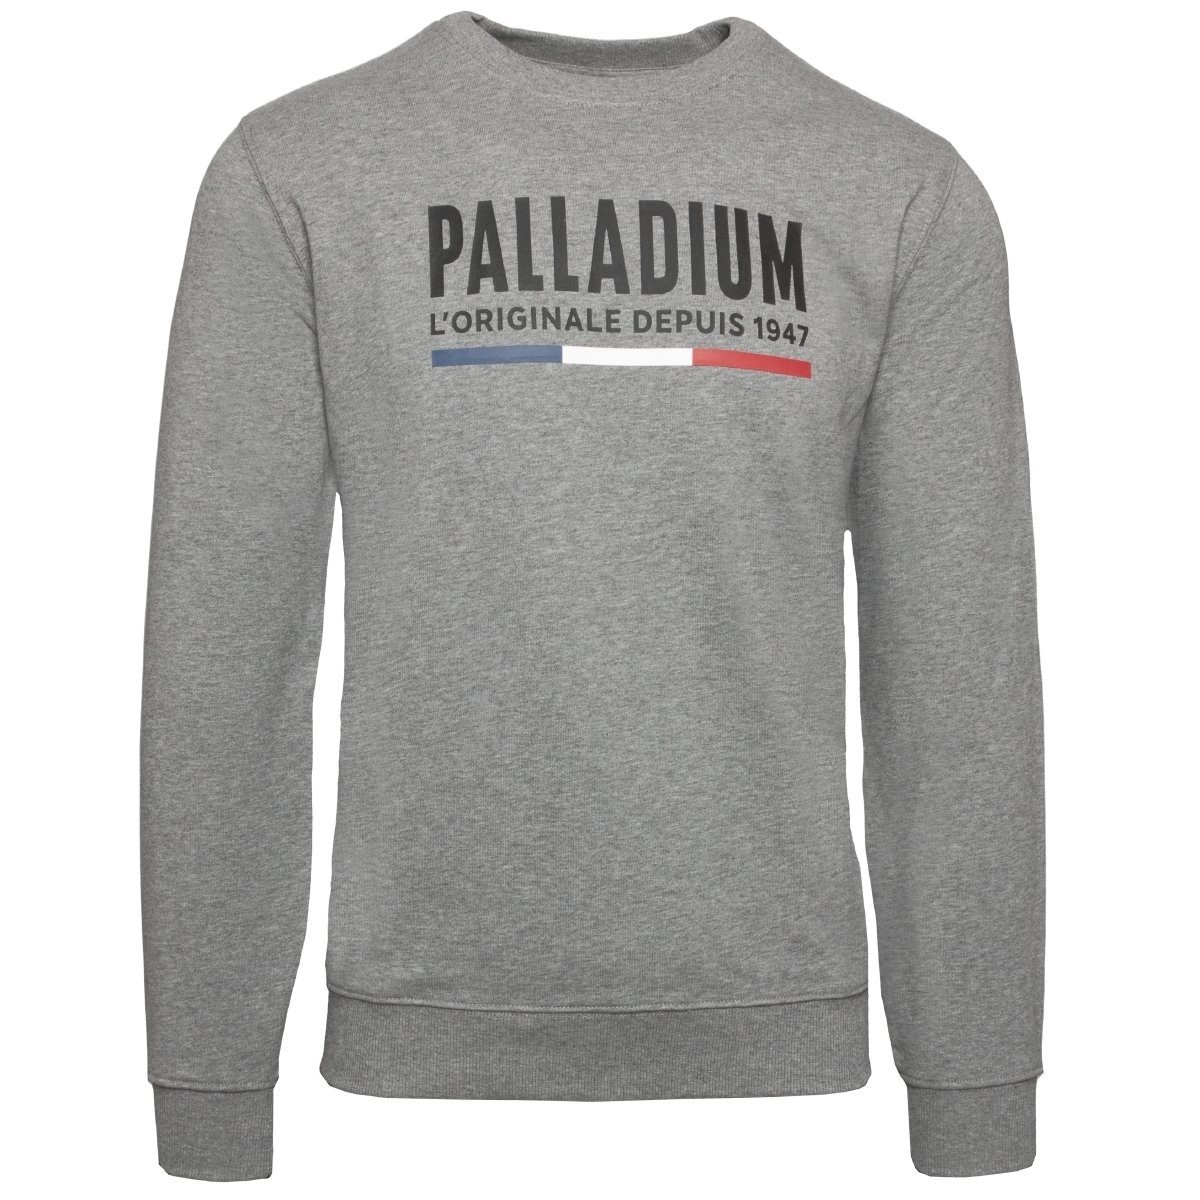 Palladium Sweatshirt Originale France Herren grau | Sweatshirts